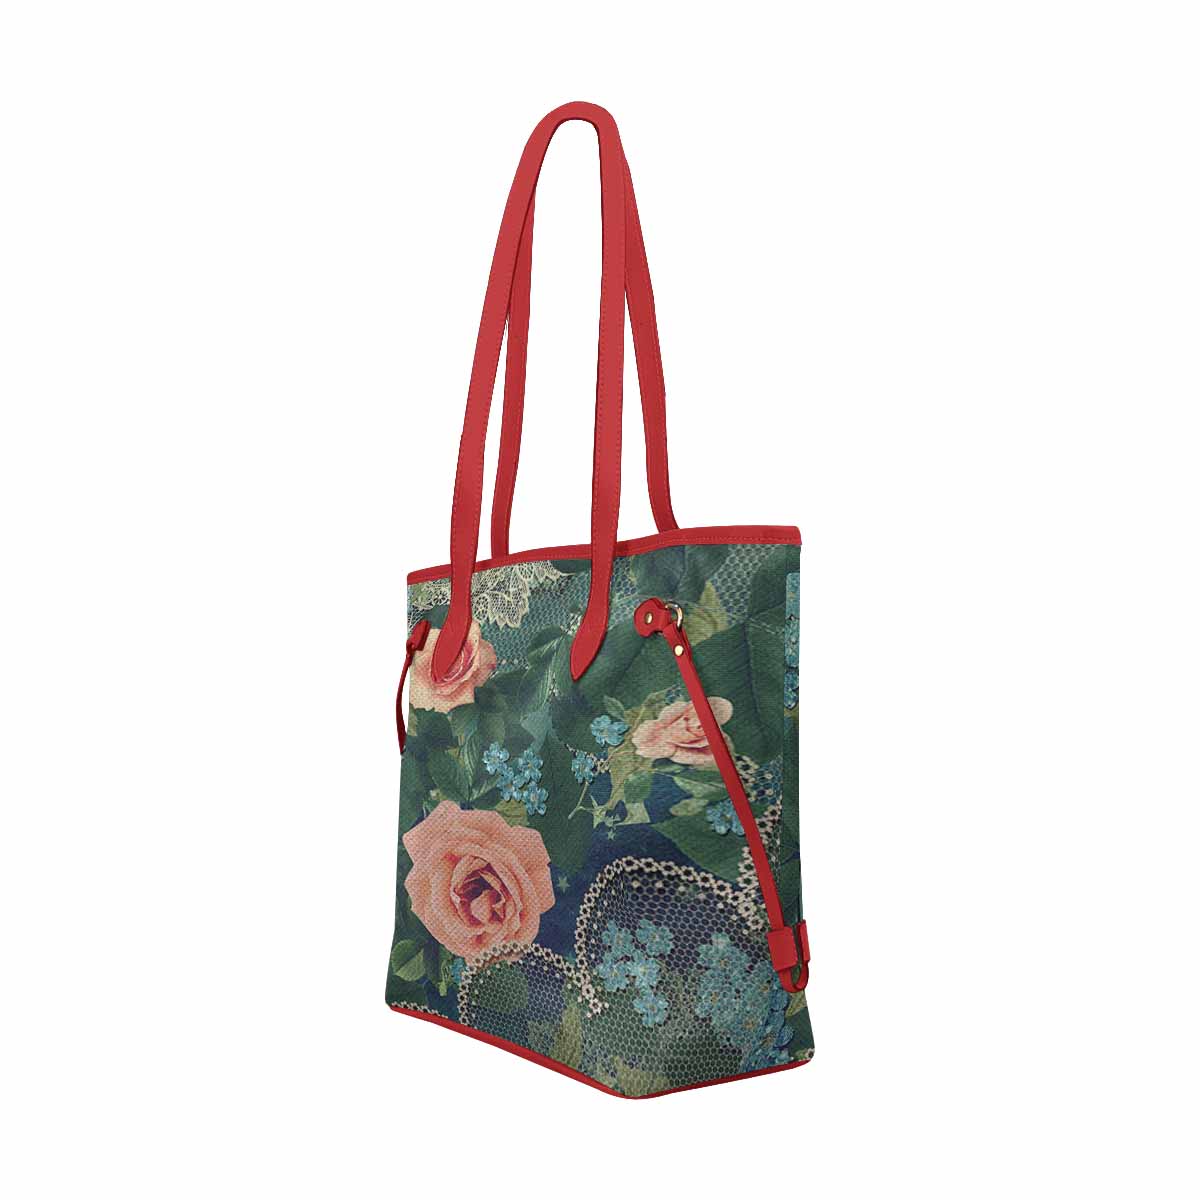 Victorian printed lace handbag, MODEL 1695361 Design 01